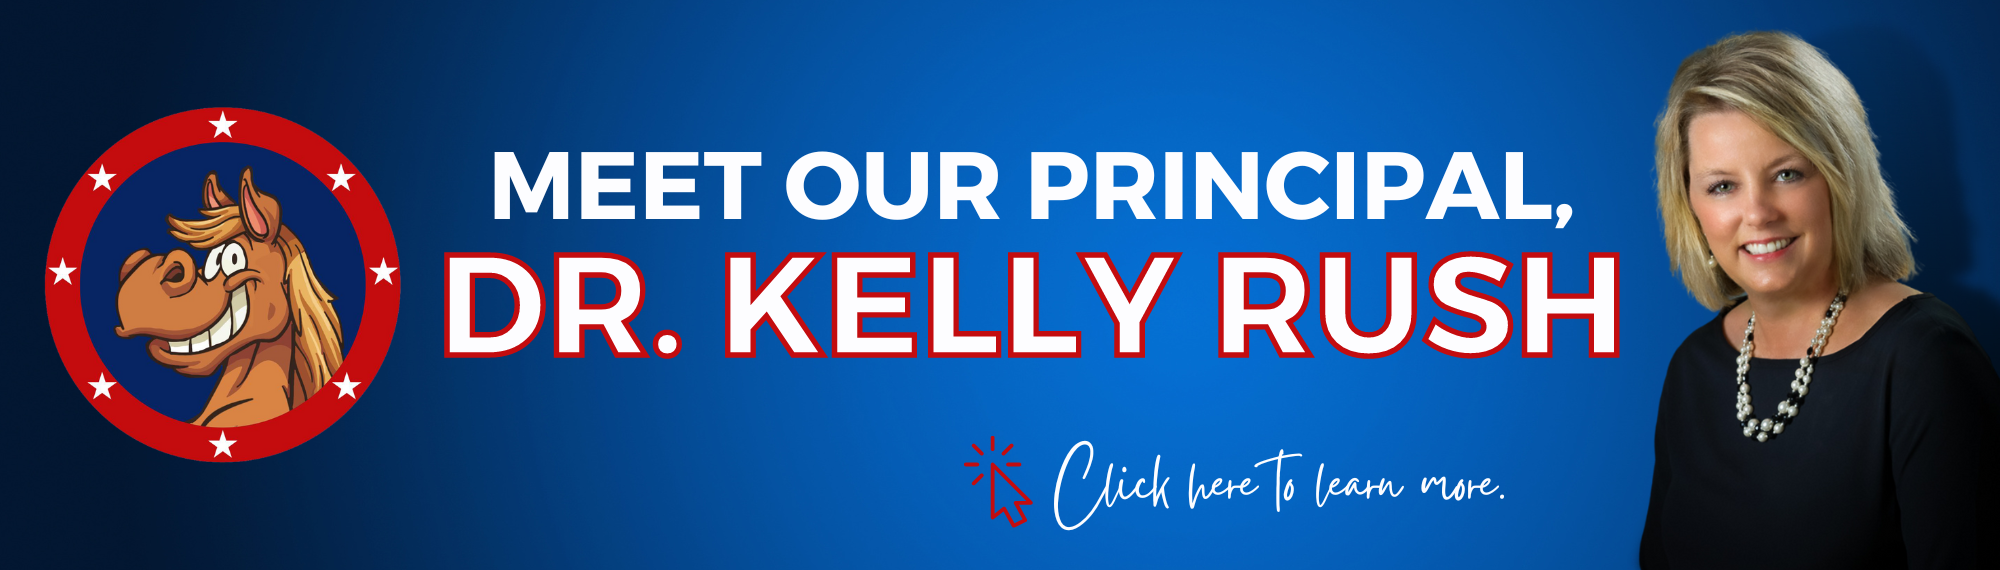 Meet Our Principal, Dr. Kelly Rush